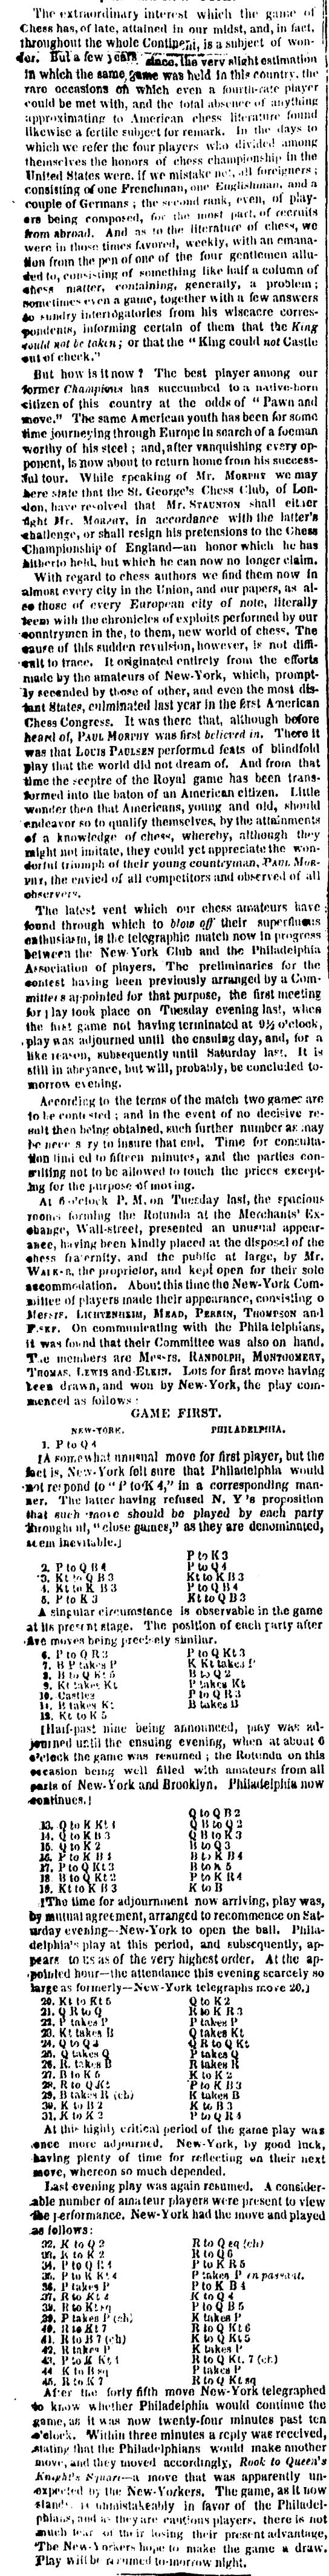 1858.11.23-02 New York Times.jpg